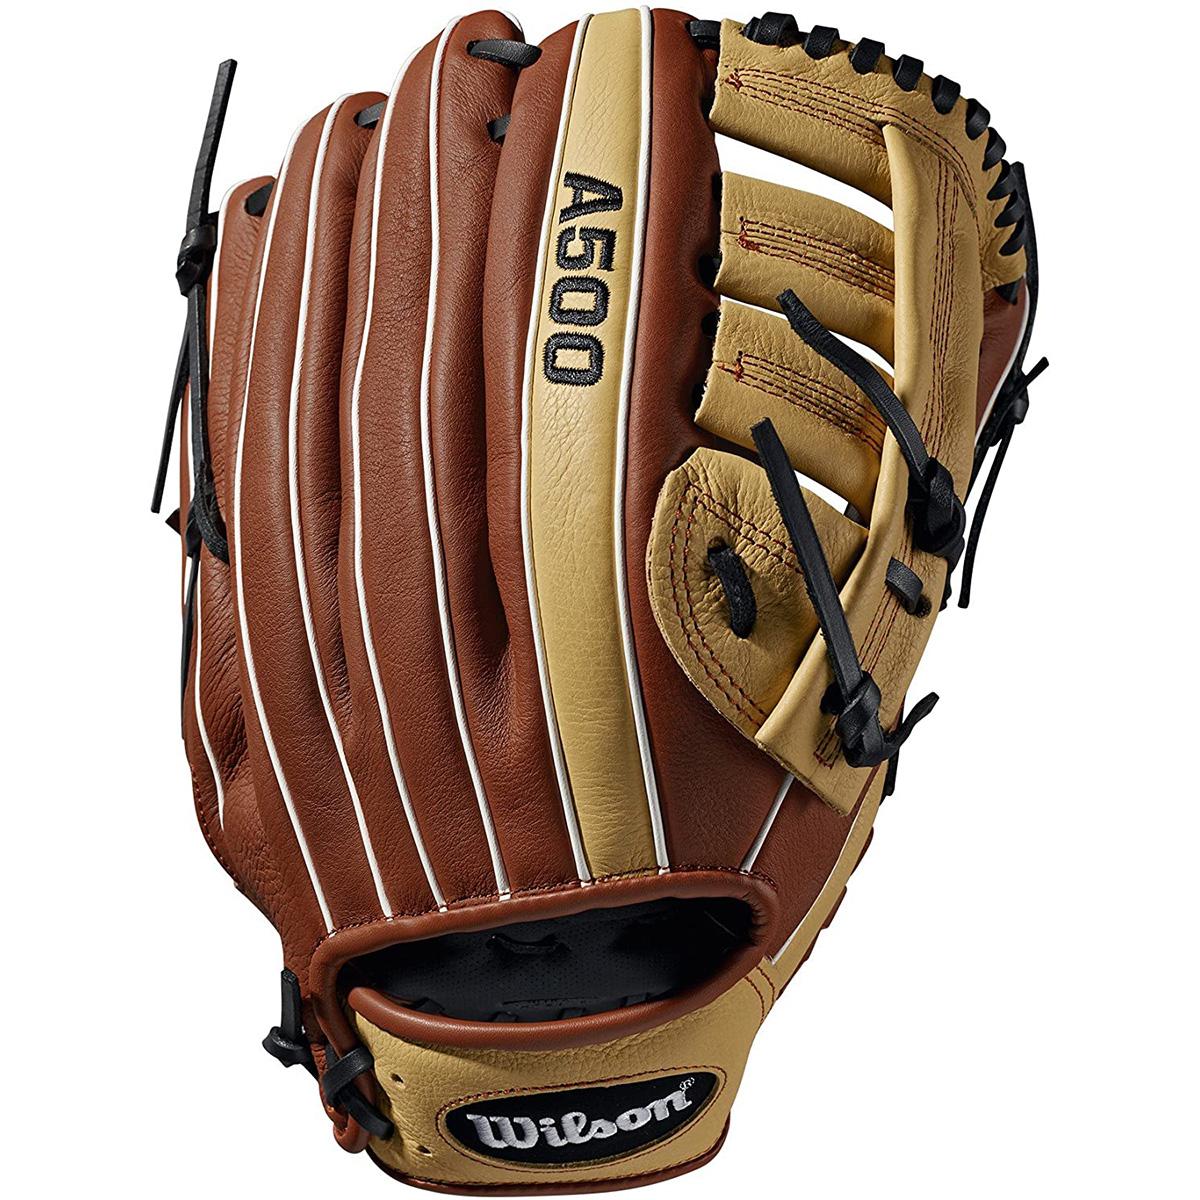 Wilson A500 Baseball Glove Series for $34.99 Shipped